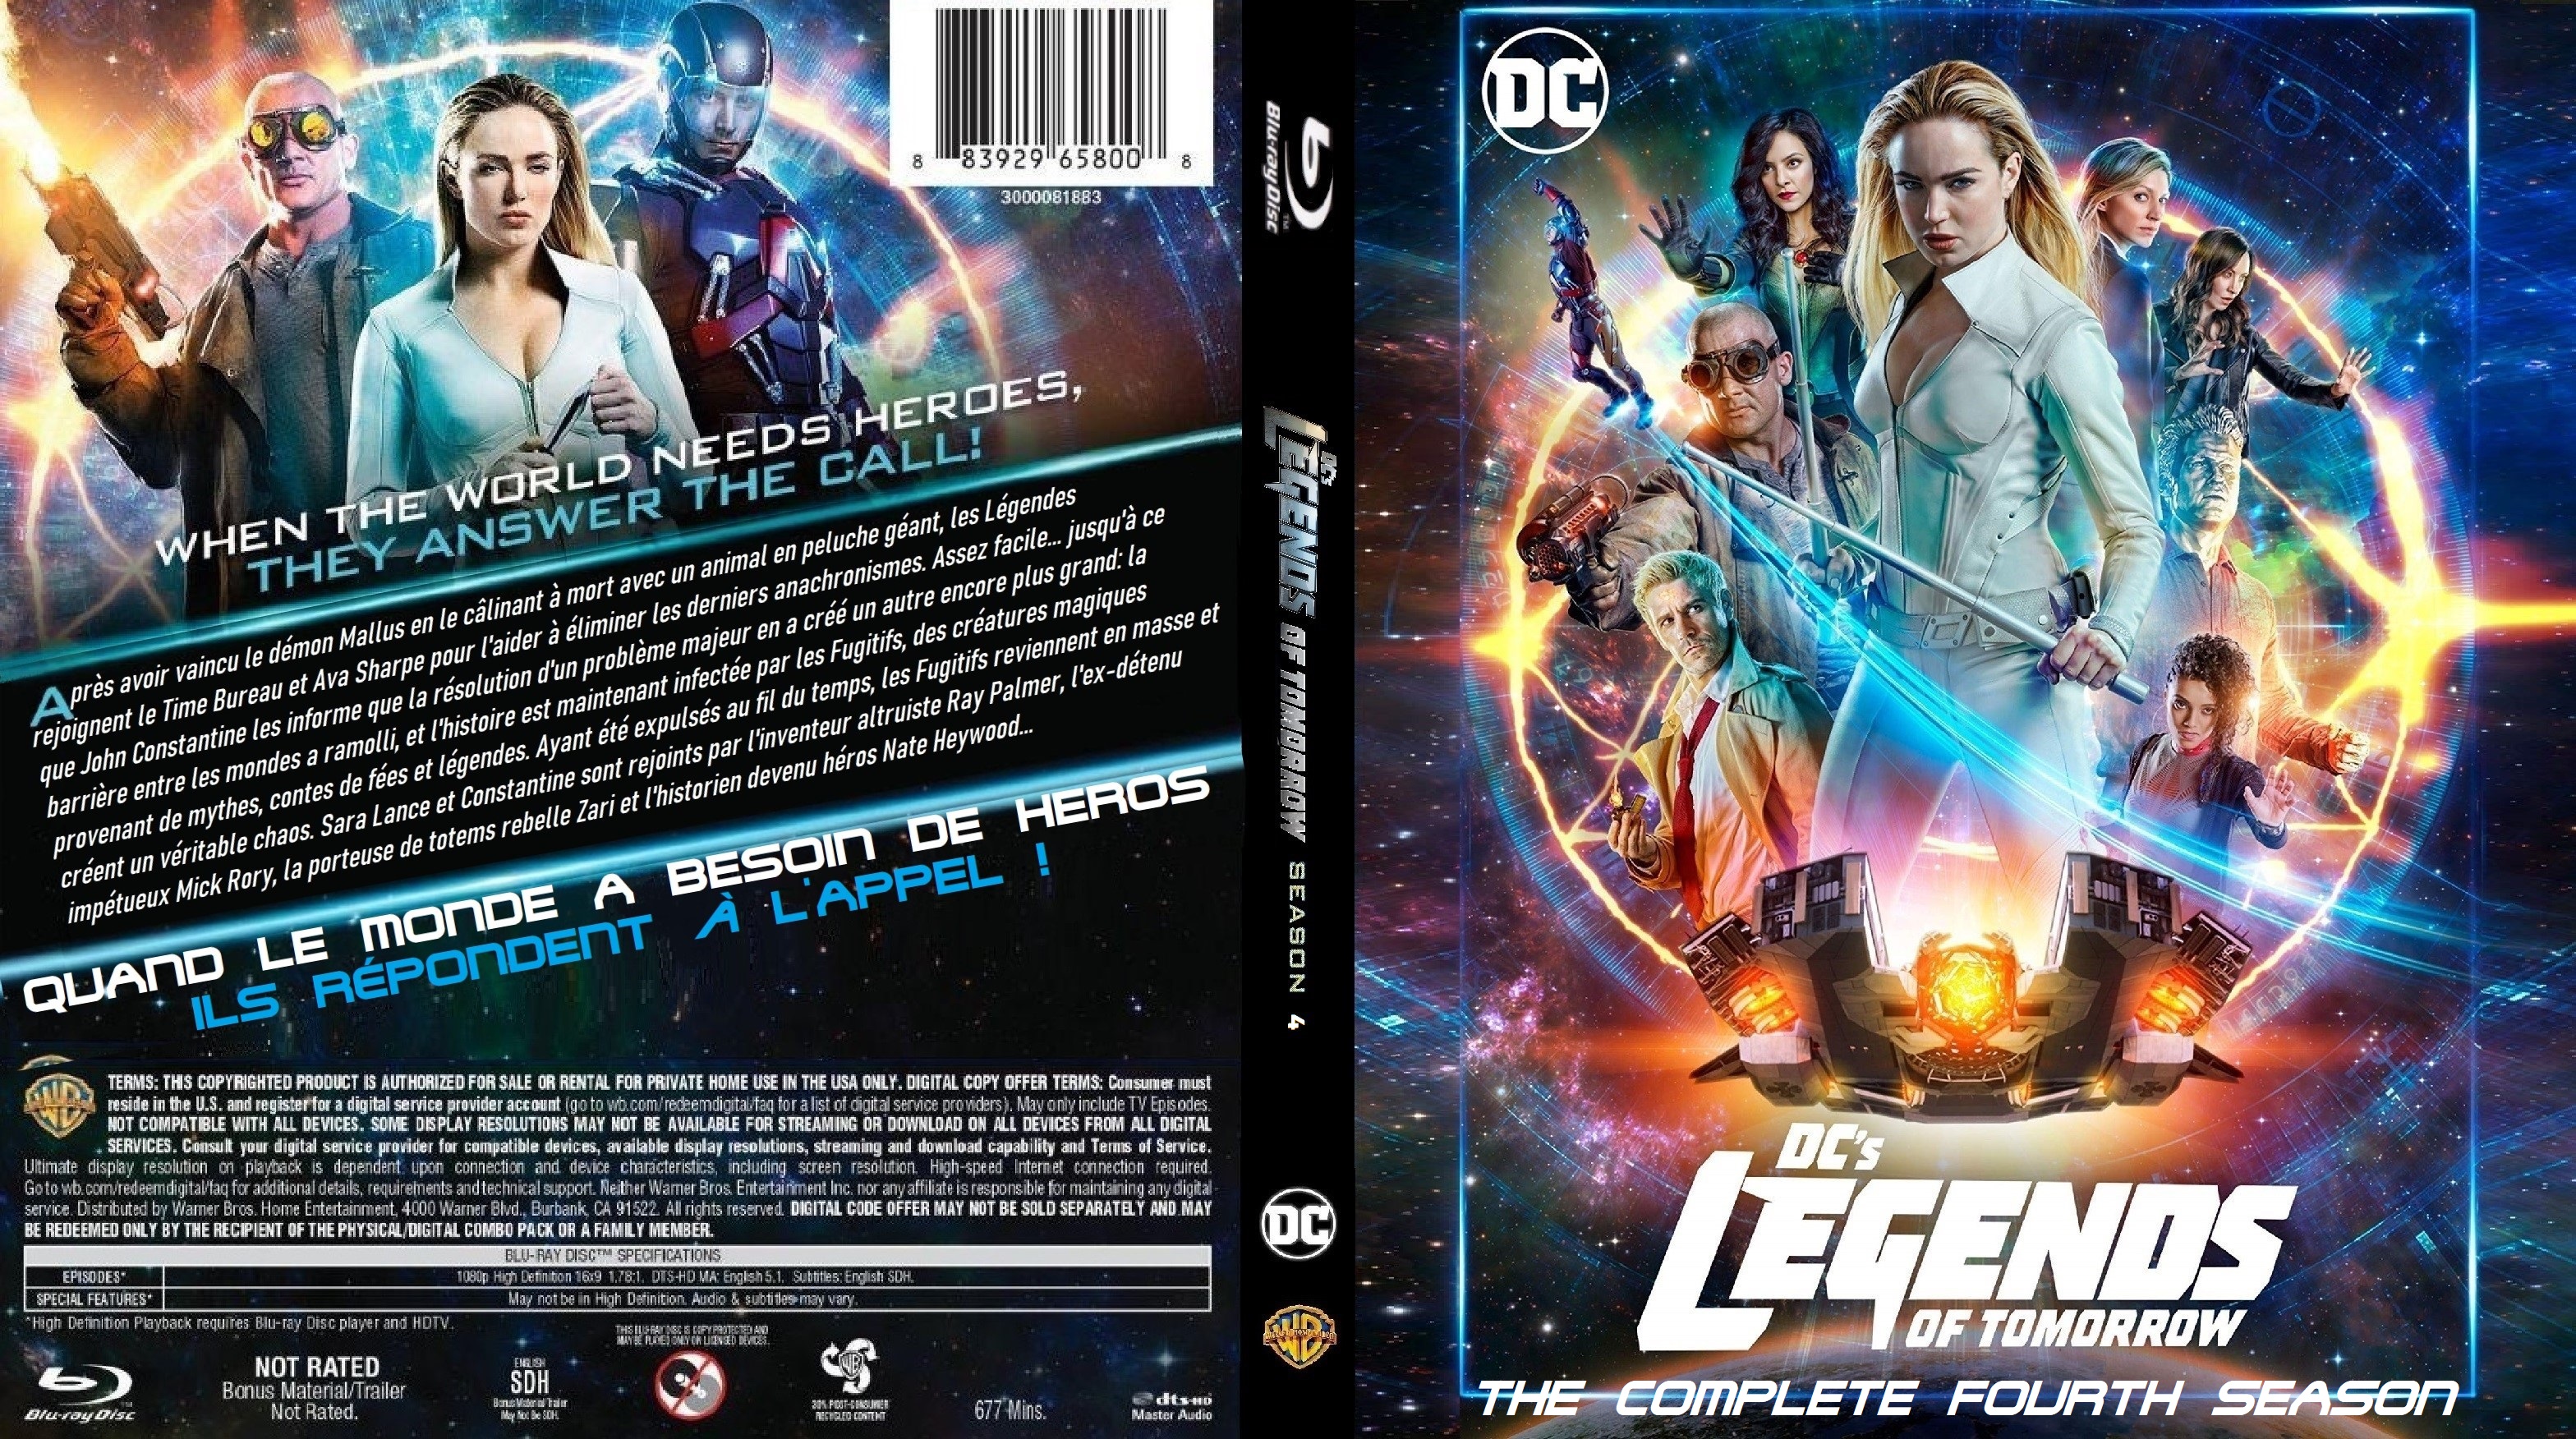 Jaquette DVD Legends of tomorrow saison 4 custom (BLU-RAY)